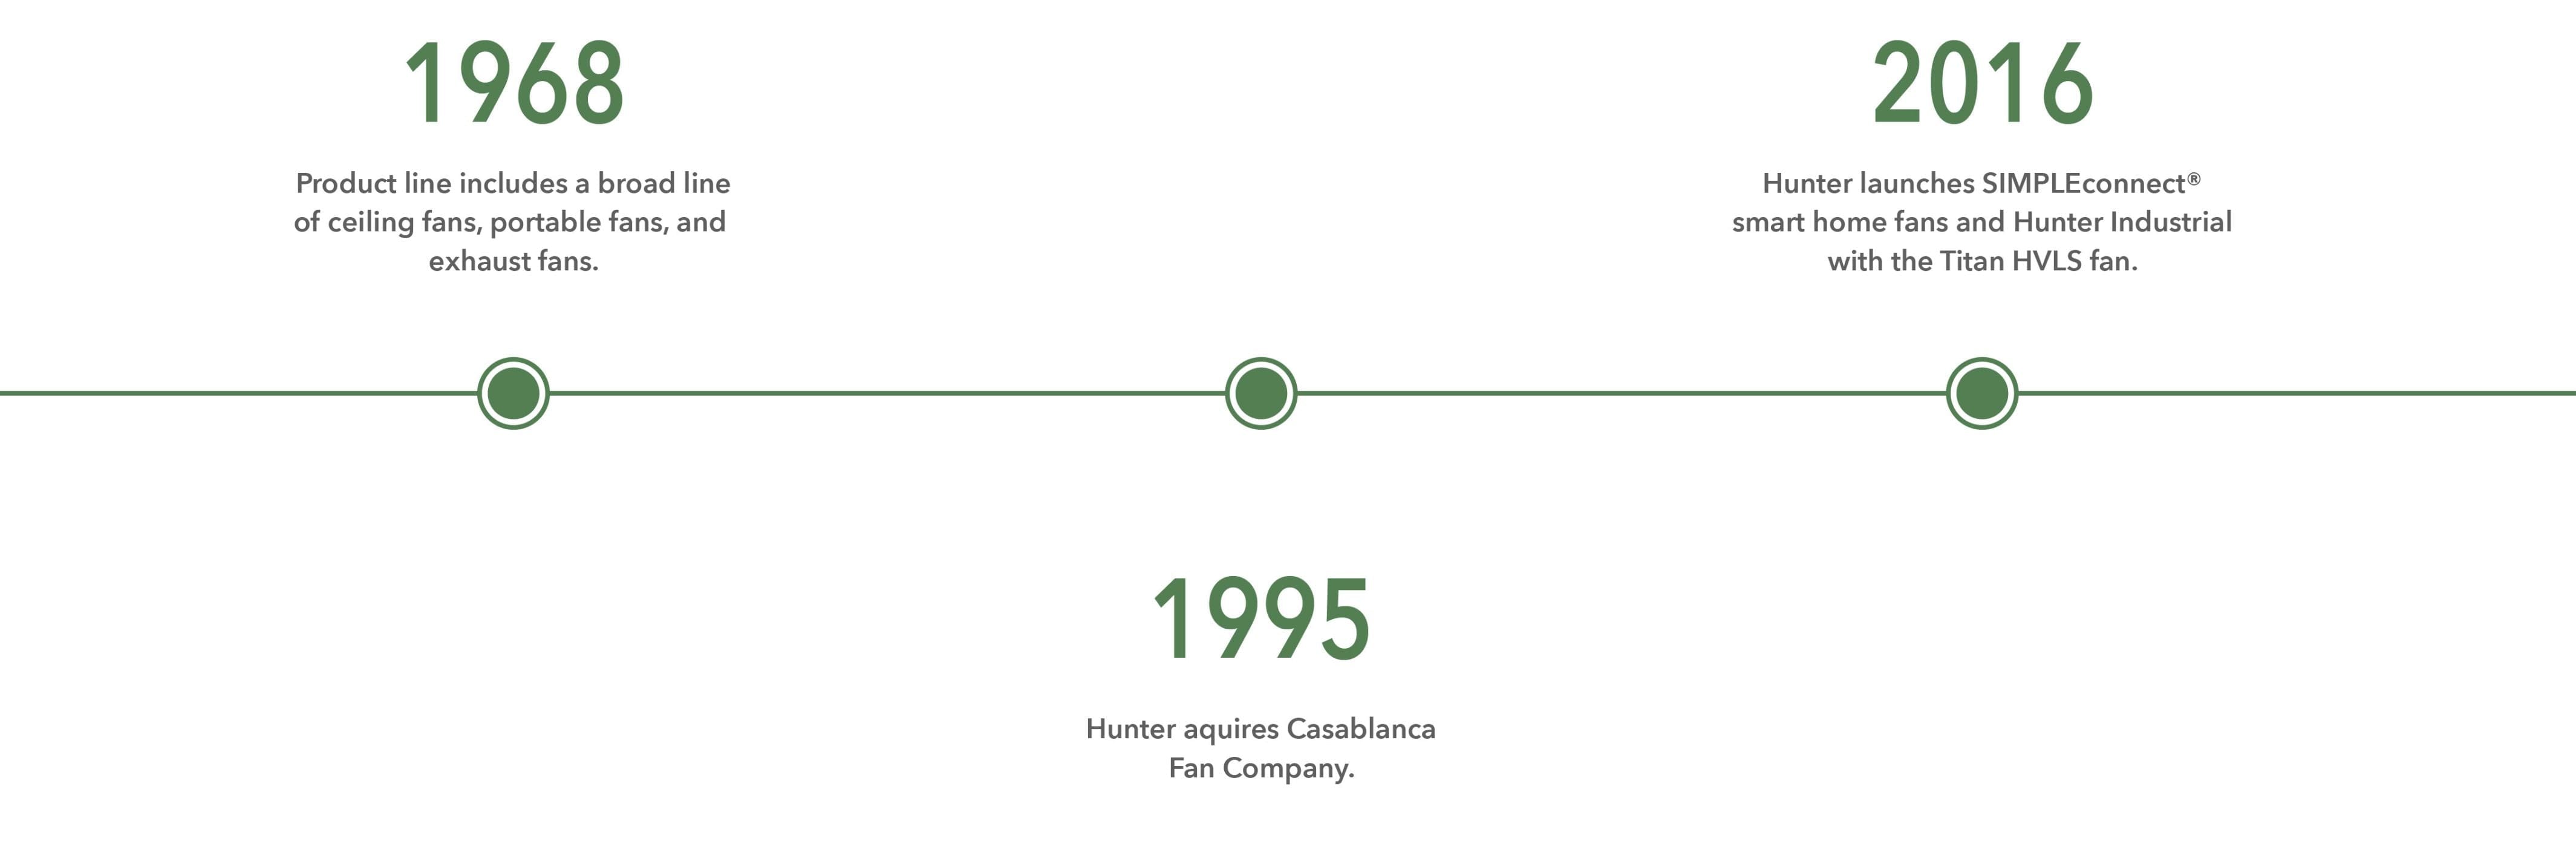 Hunter timeline through 1995